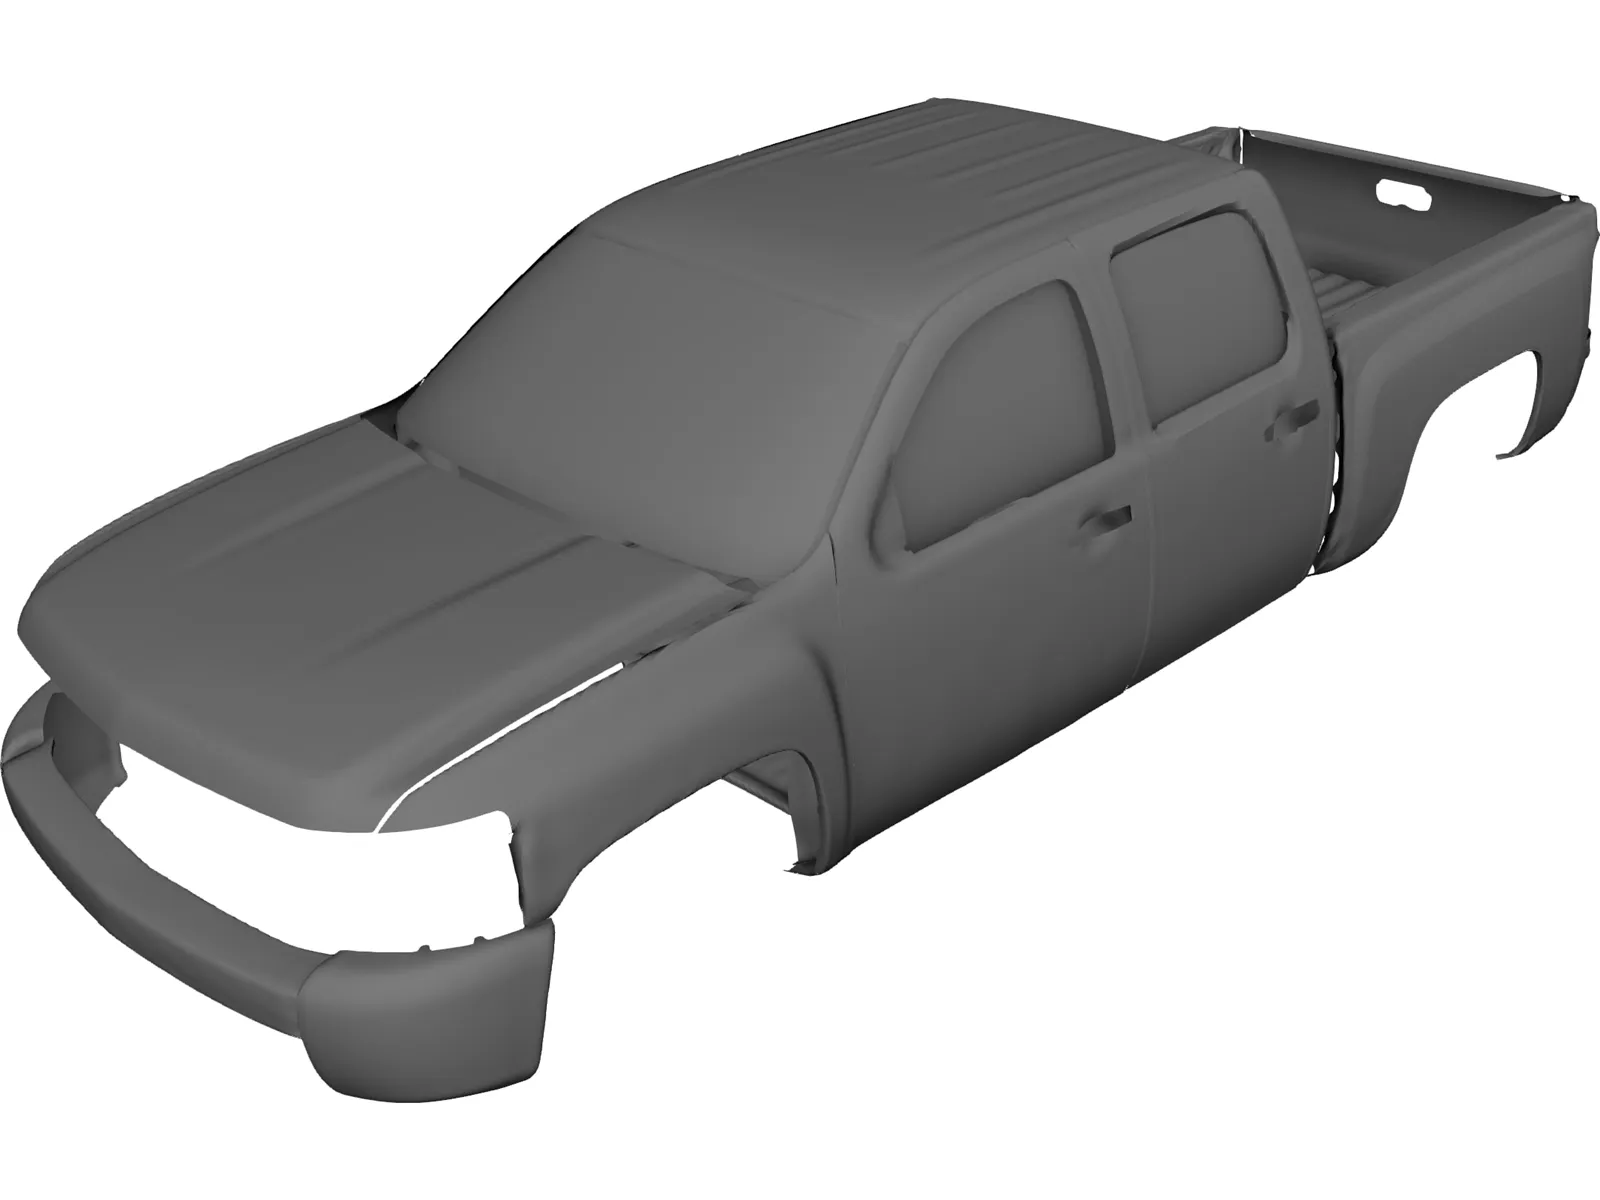 Chevrolet Silverado Body 3D Model